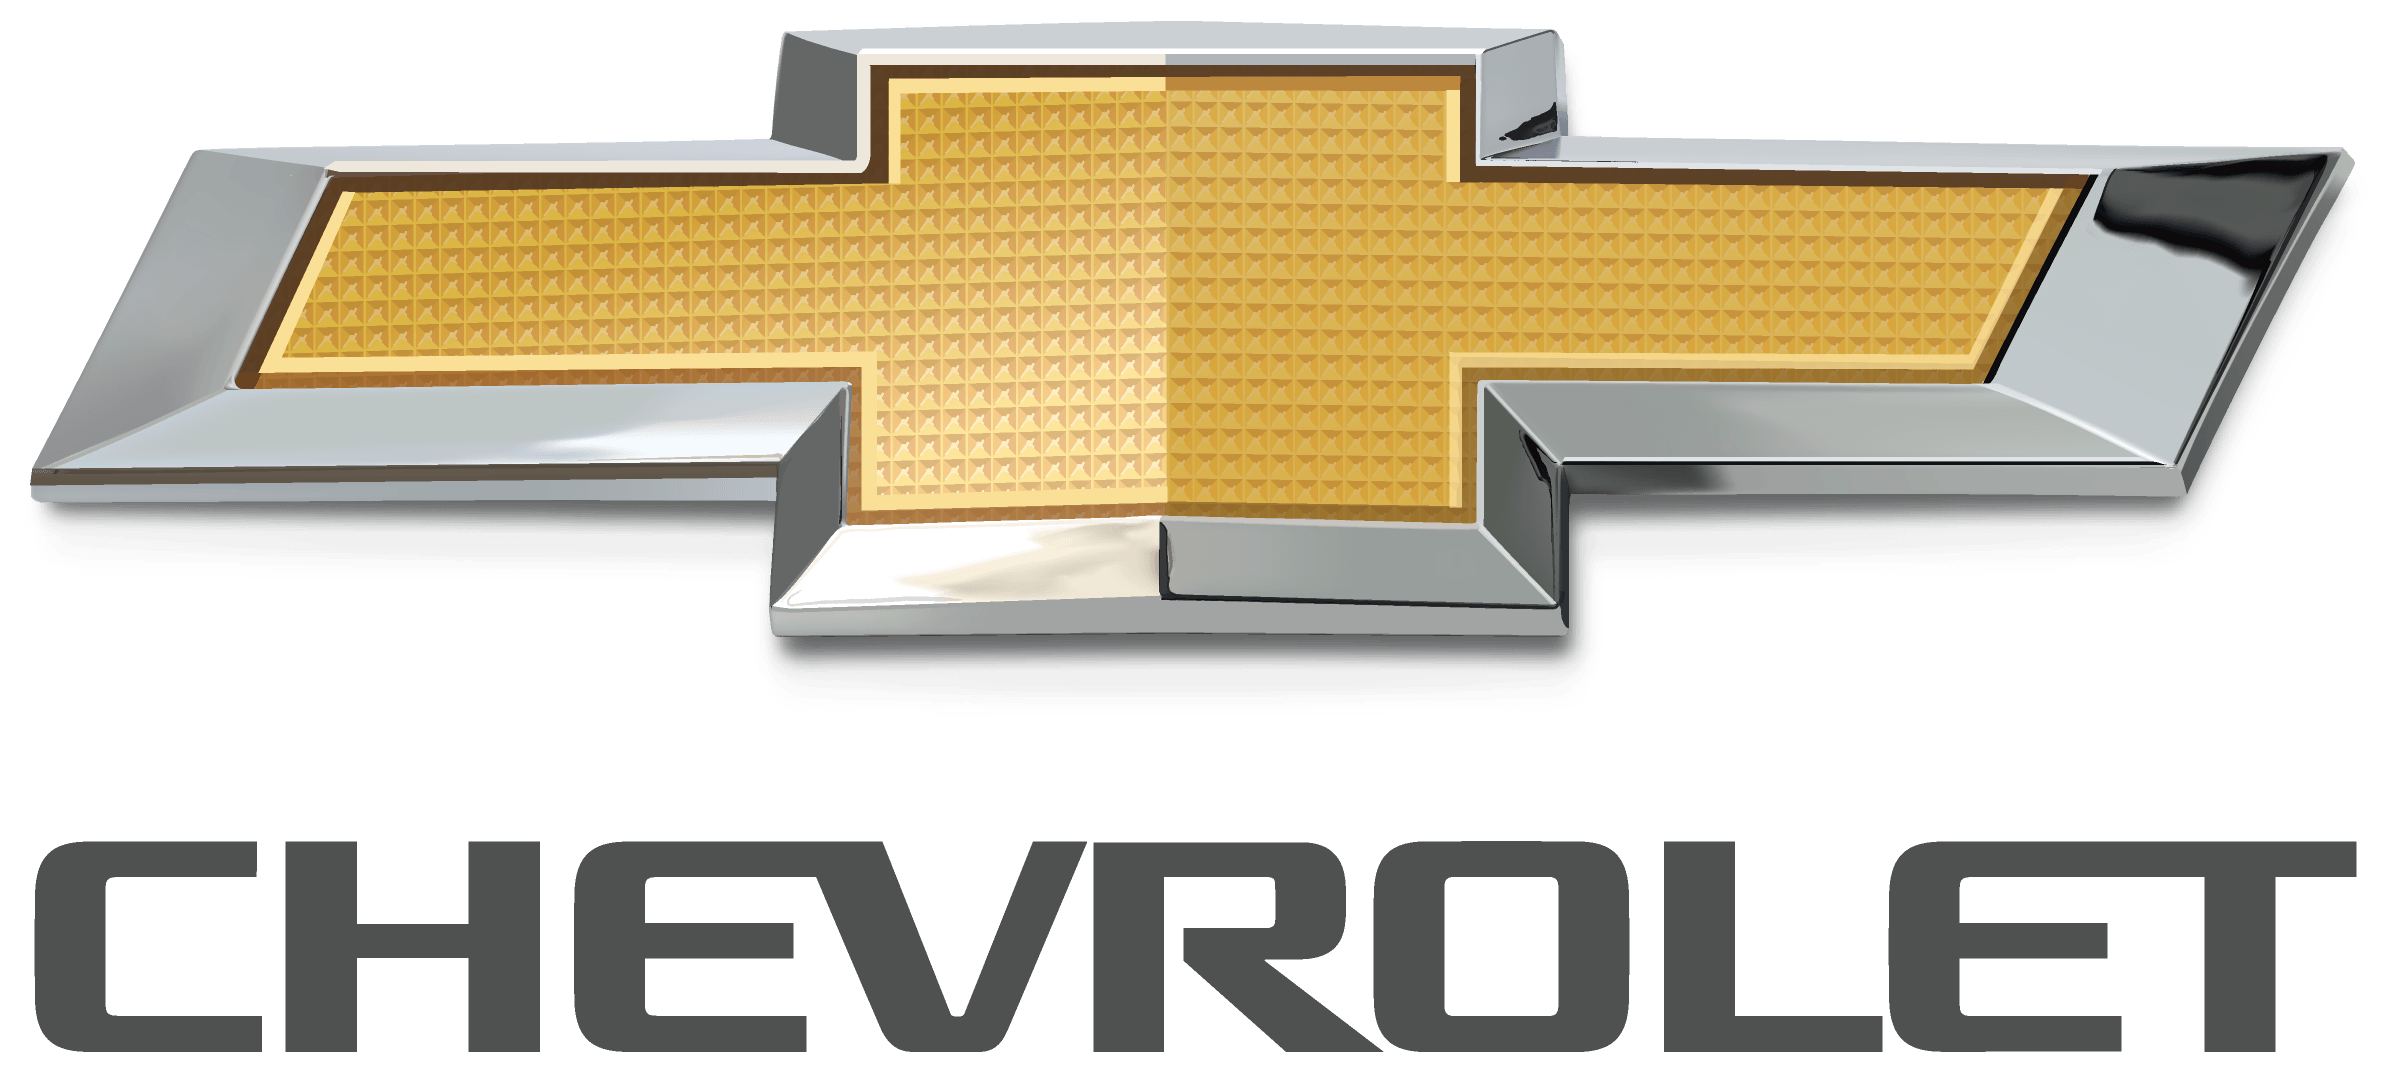 Chevrolet Logo PNG Background